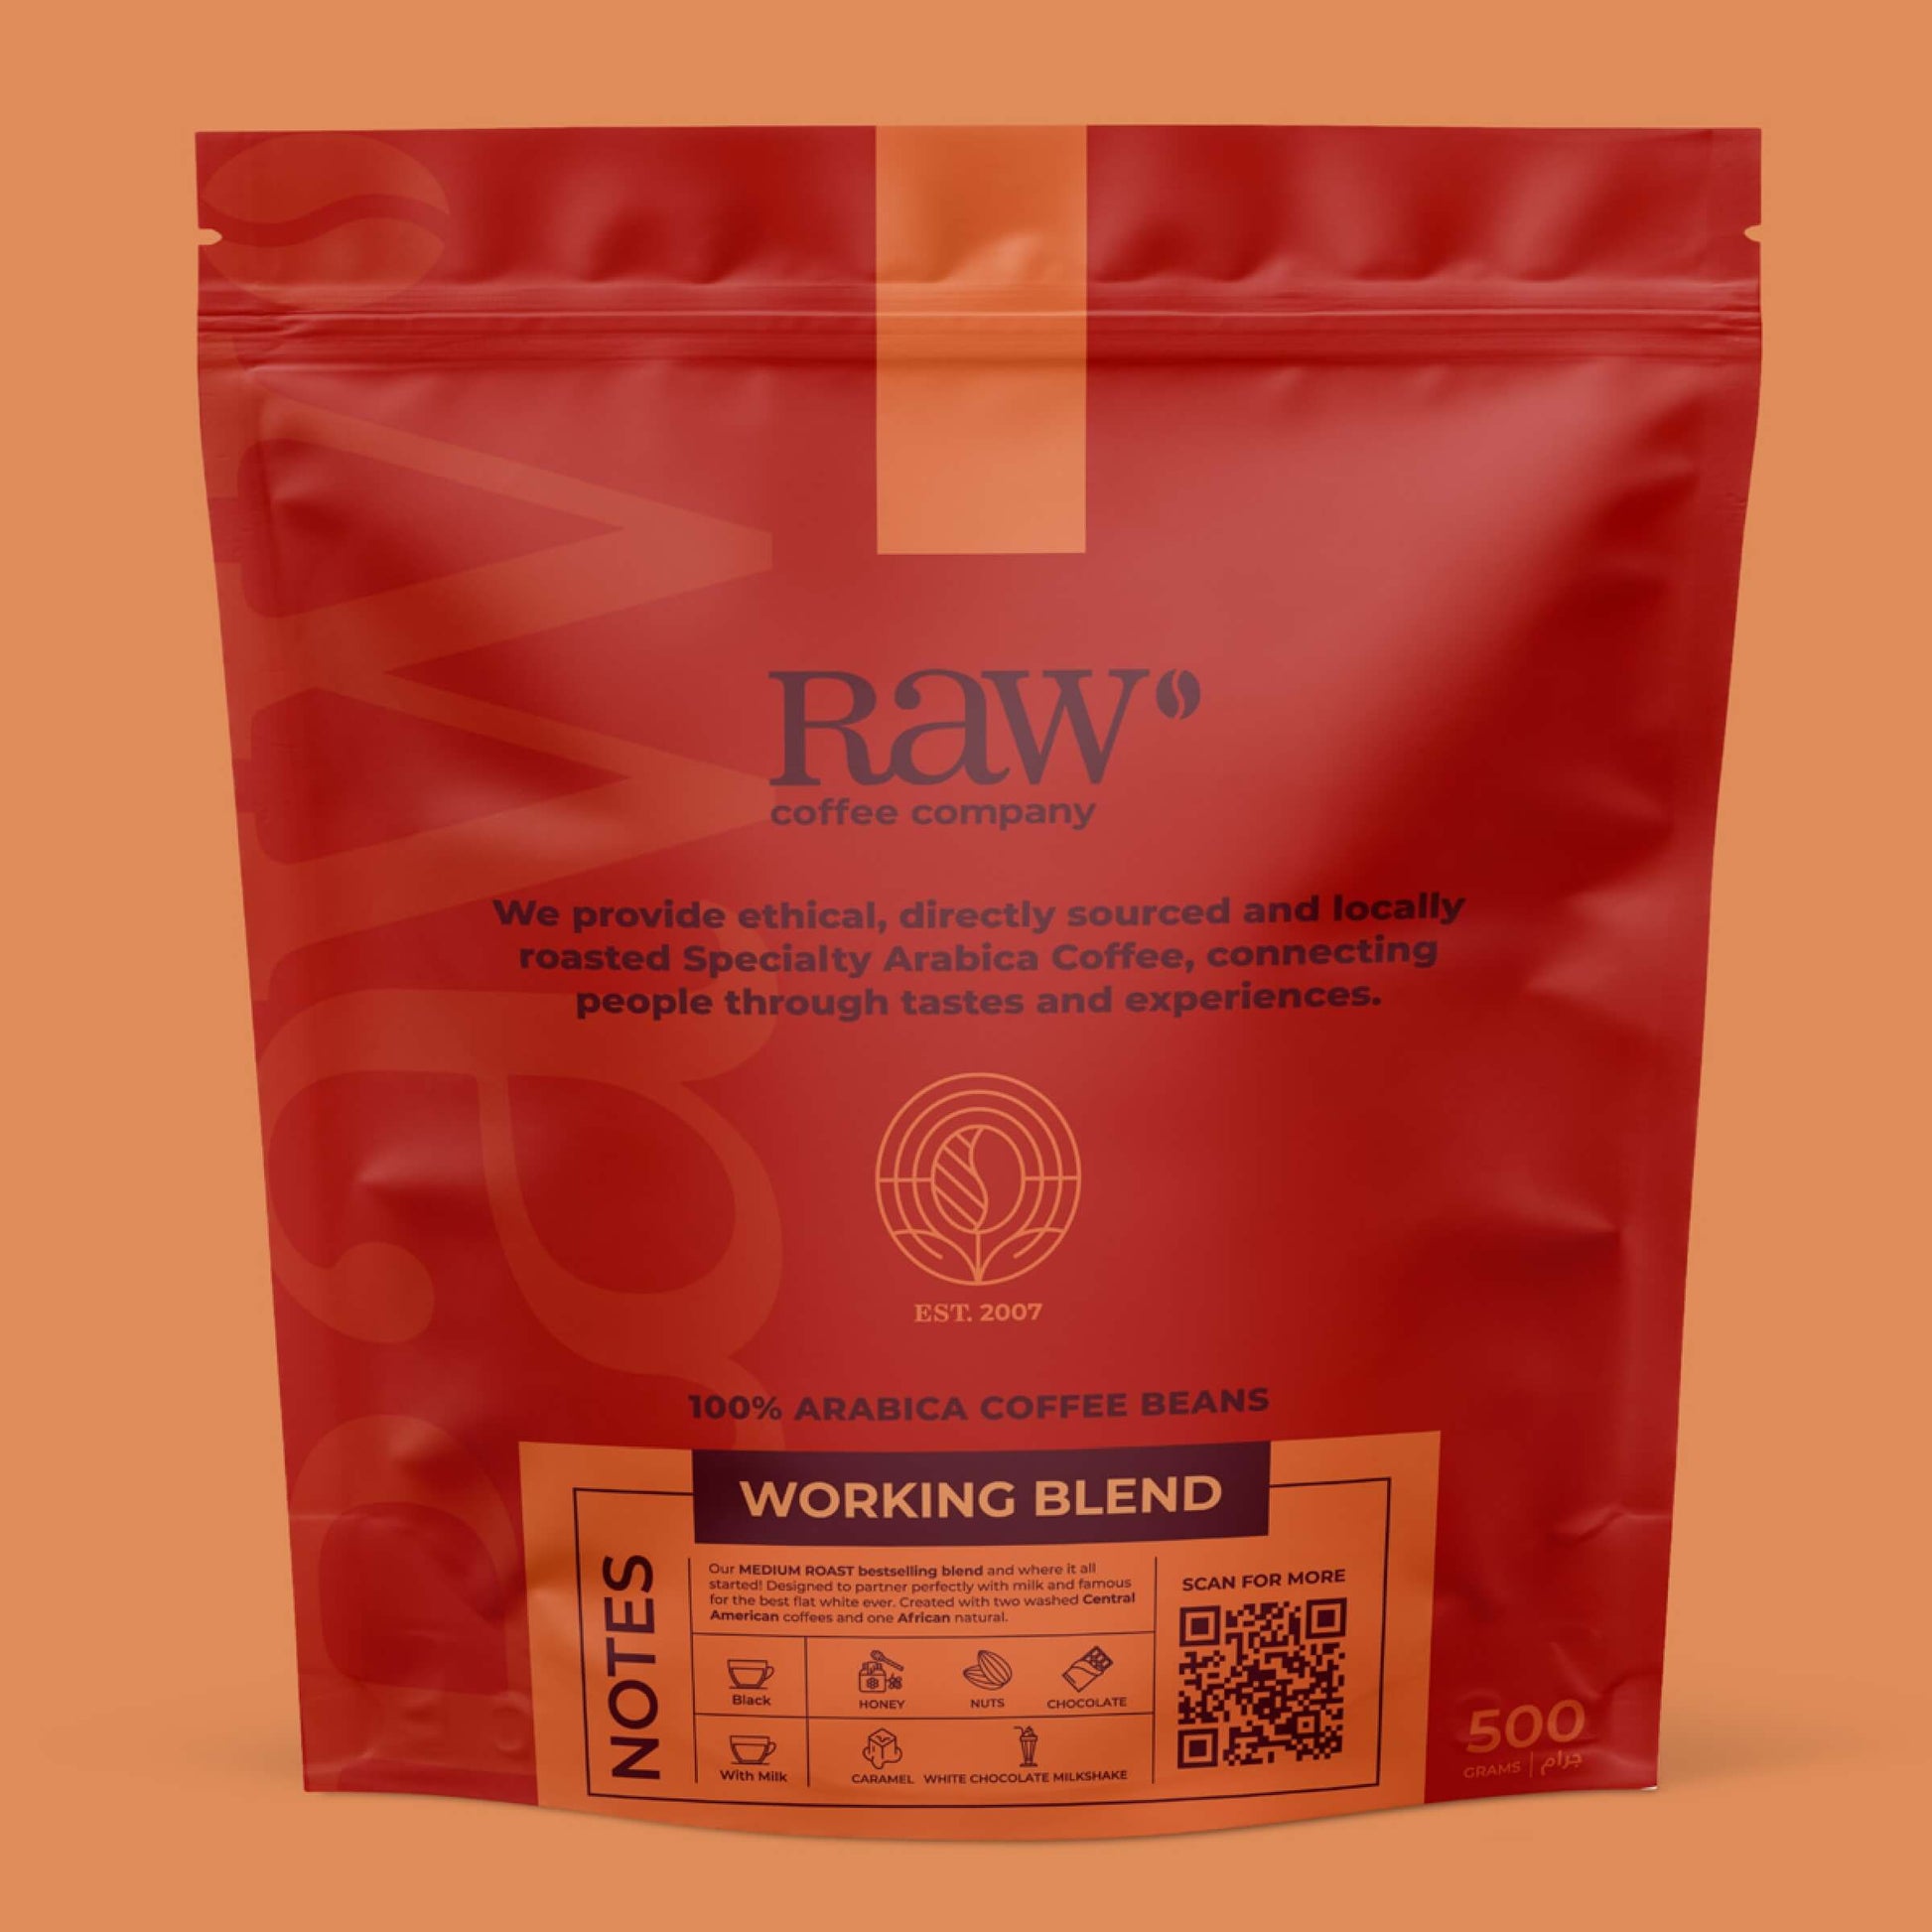 Working-Blend-Coffee-500gm_RAW-Coffee-Company